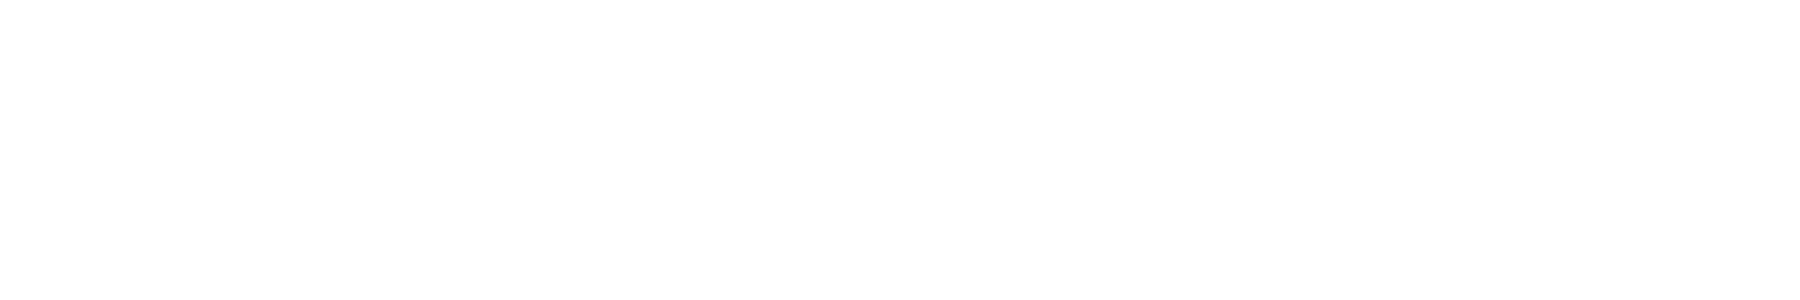 Entry Management CSuite Members Belong Grow Succeed